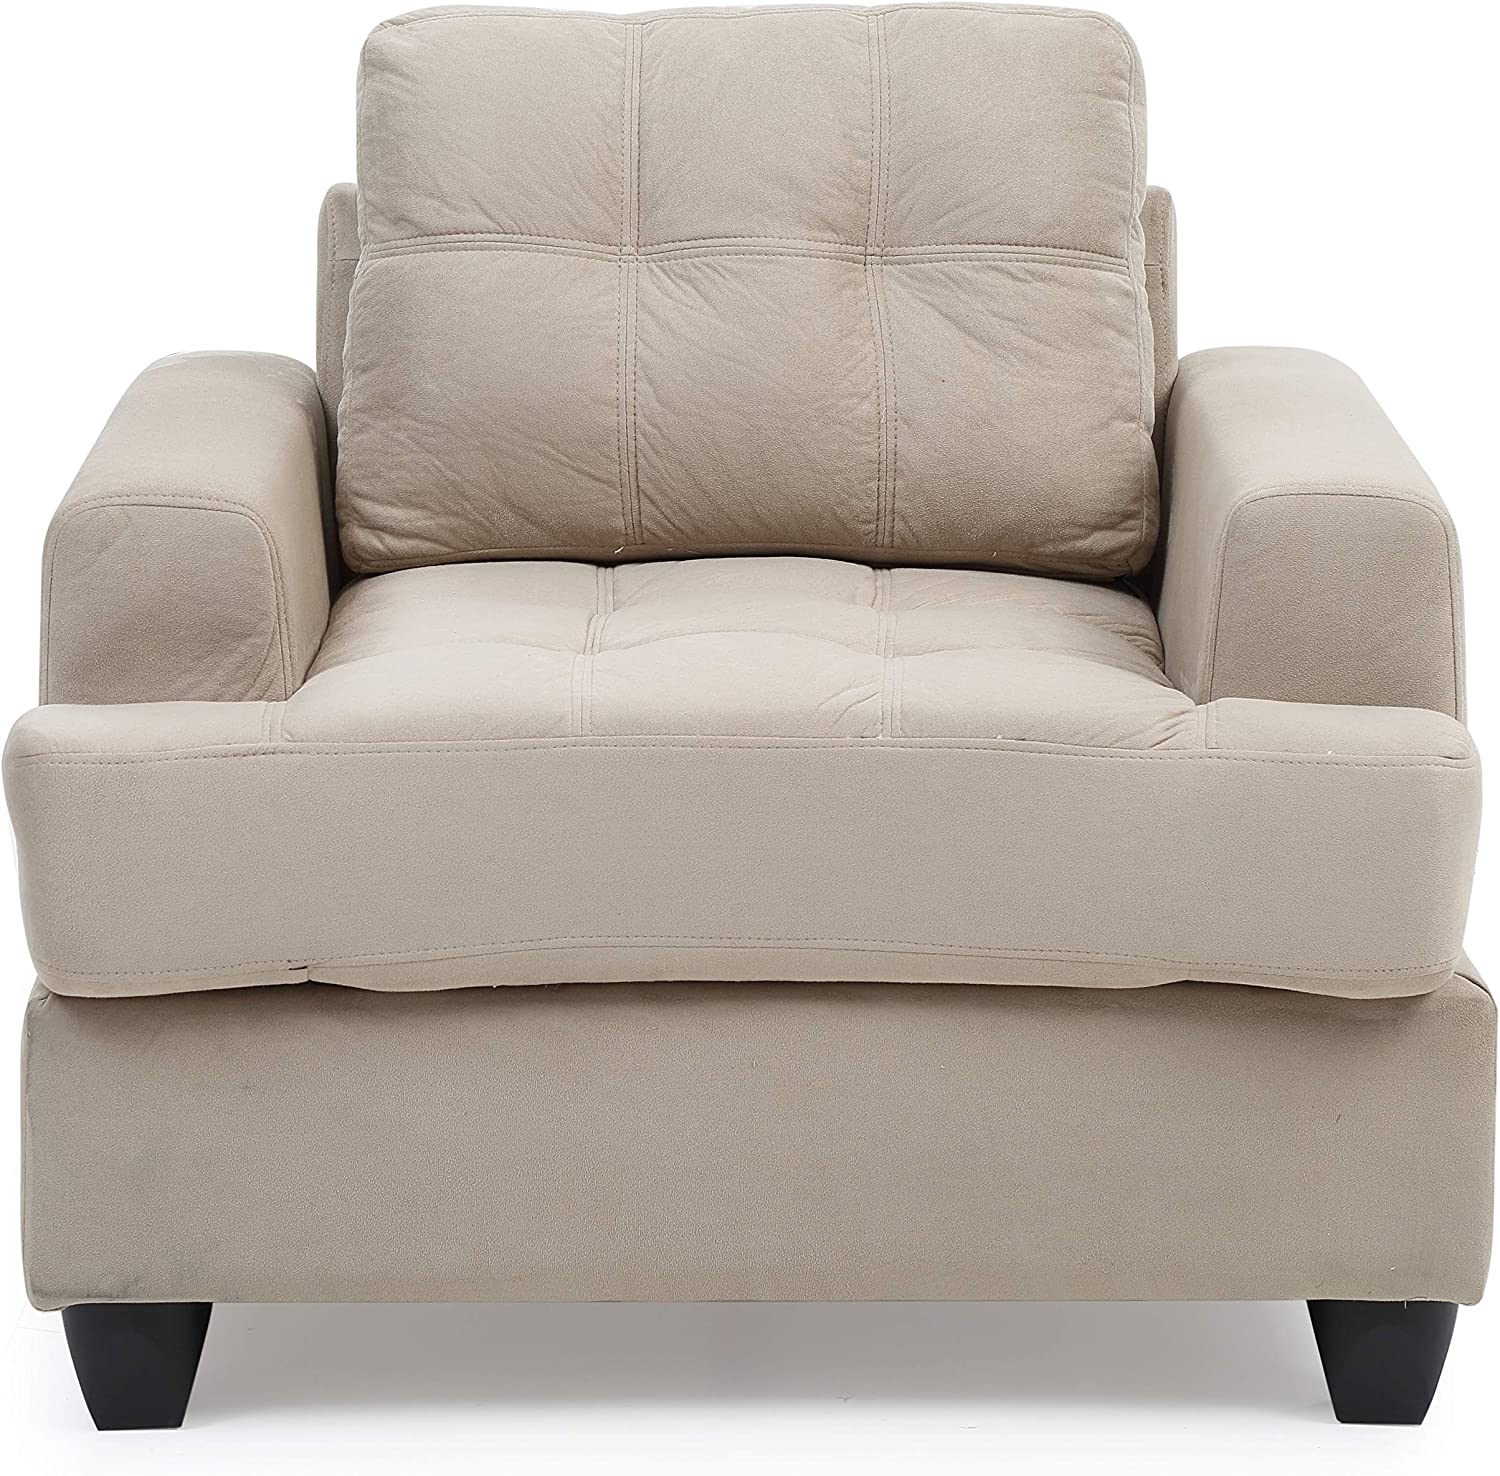 Glory Furniture G511A-C Living Room Chair, Beige